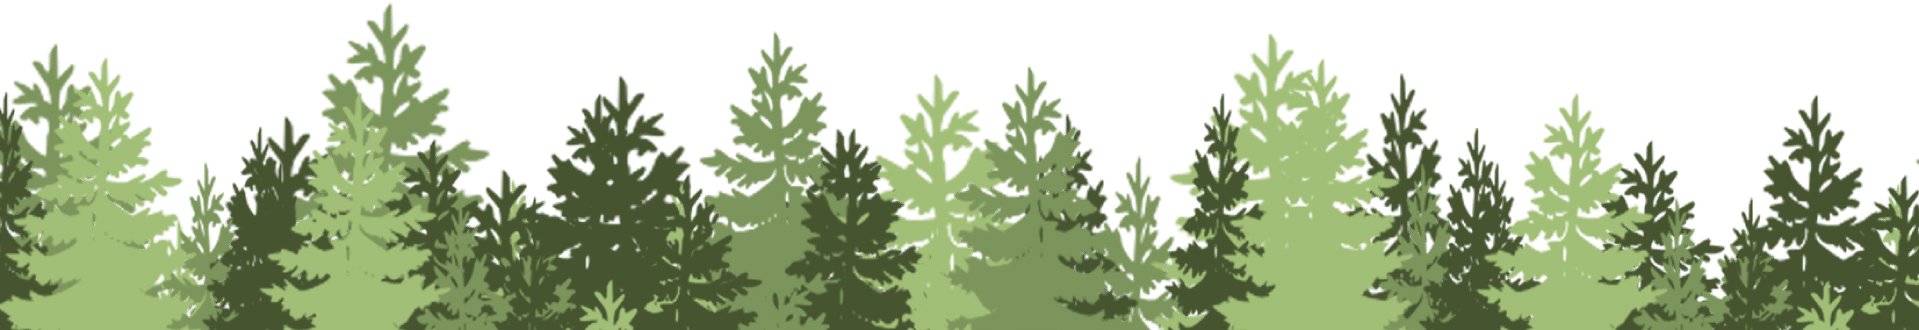 Trees background